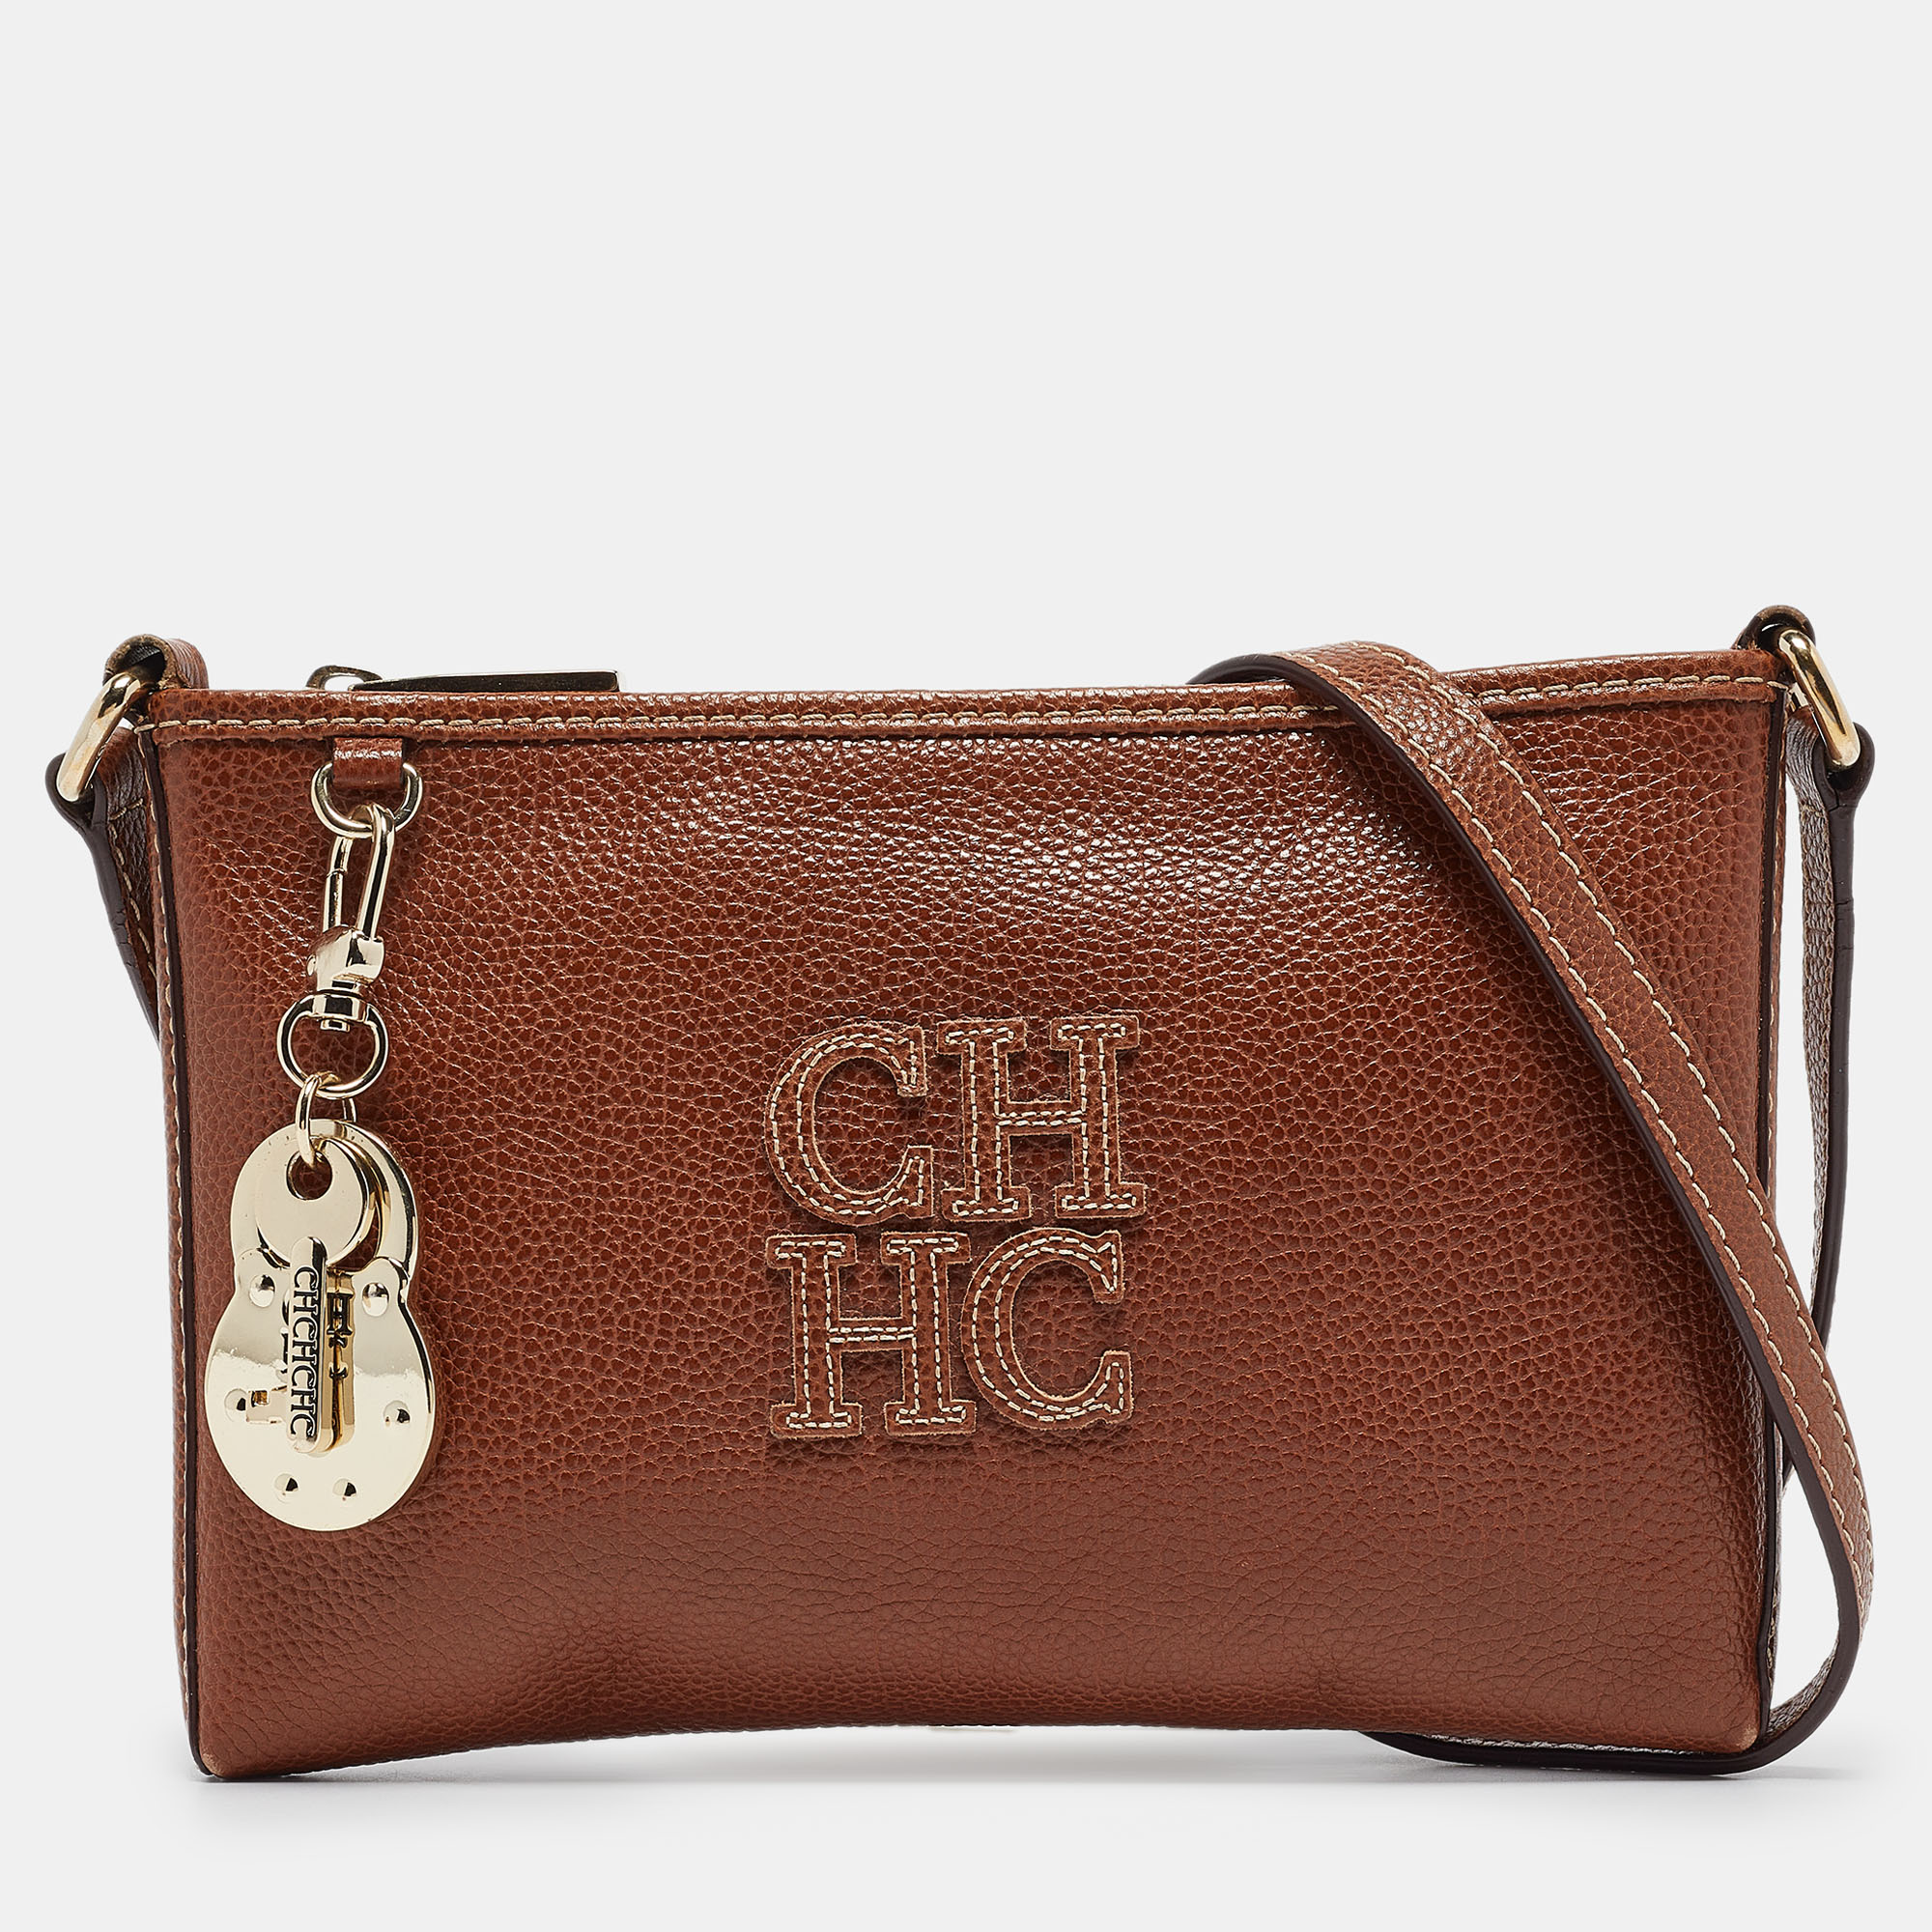 Carolina herrera brown leather lock charm crossbody bag